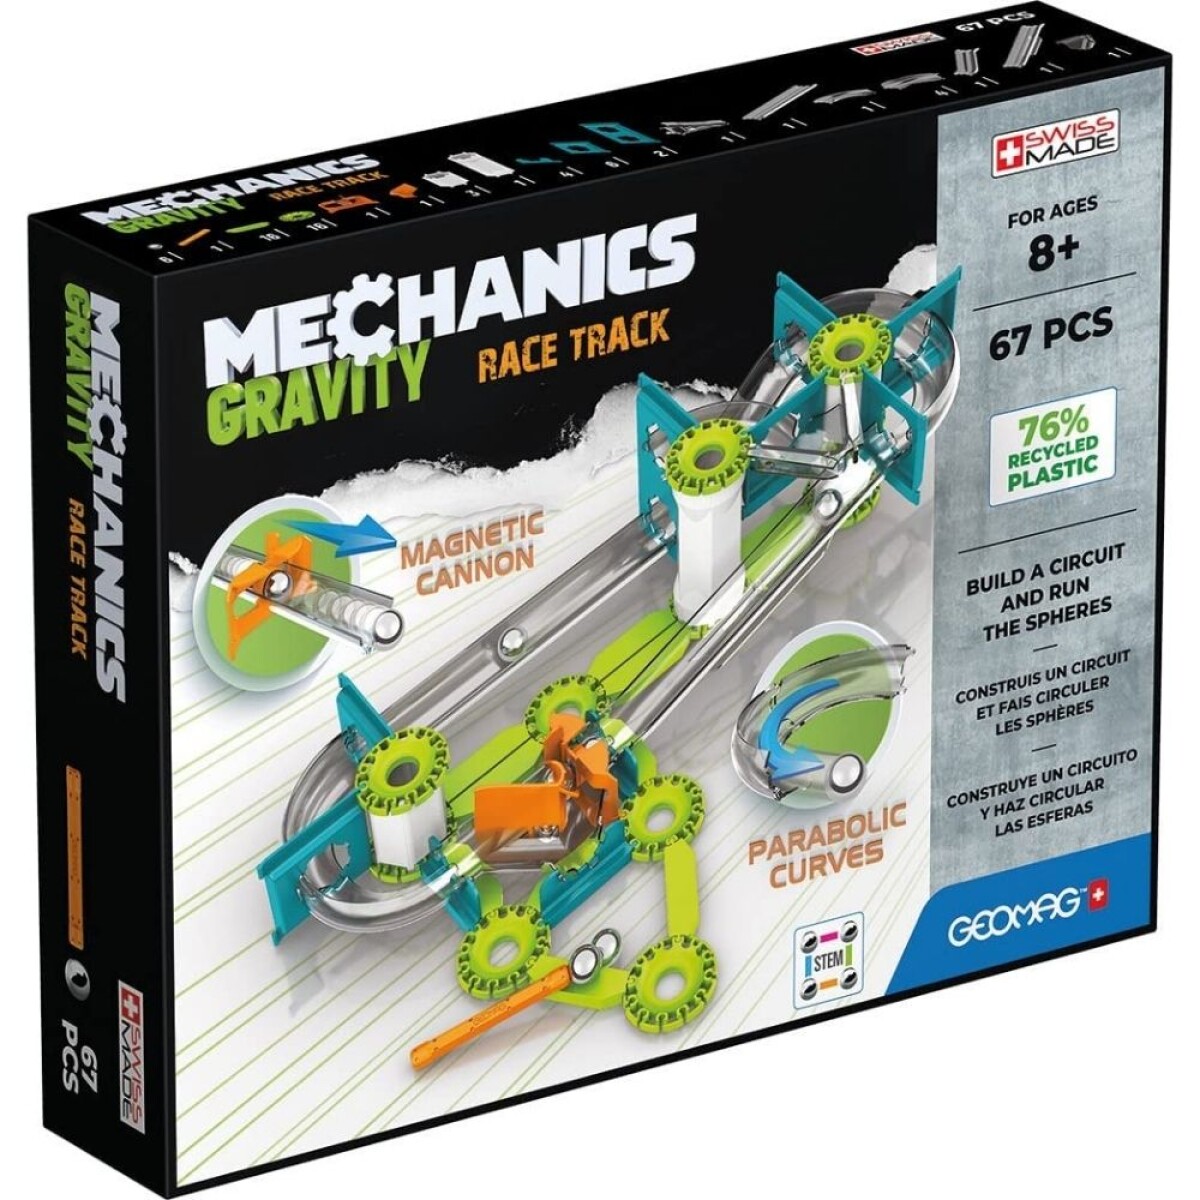 Mechanic Gravity Race Track 67 pcs - 001 